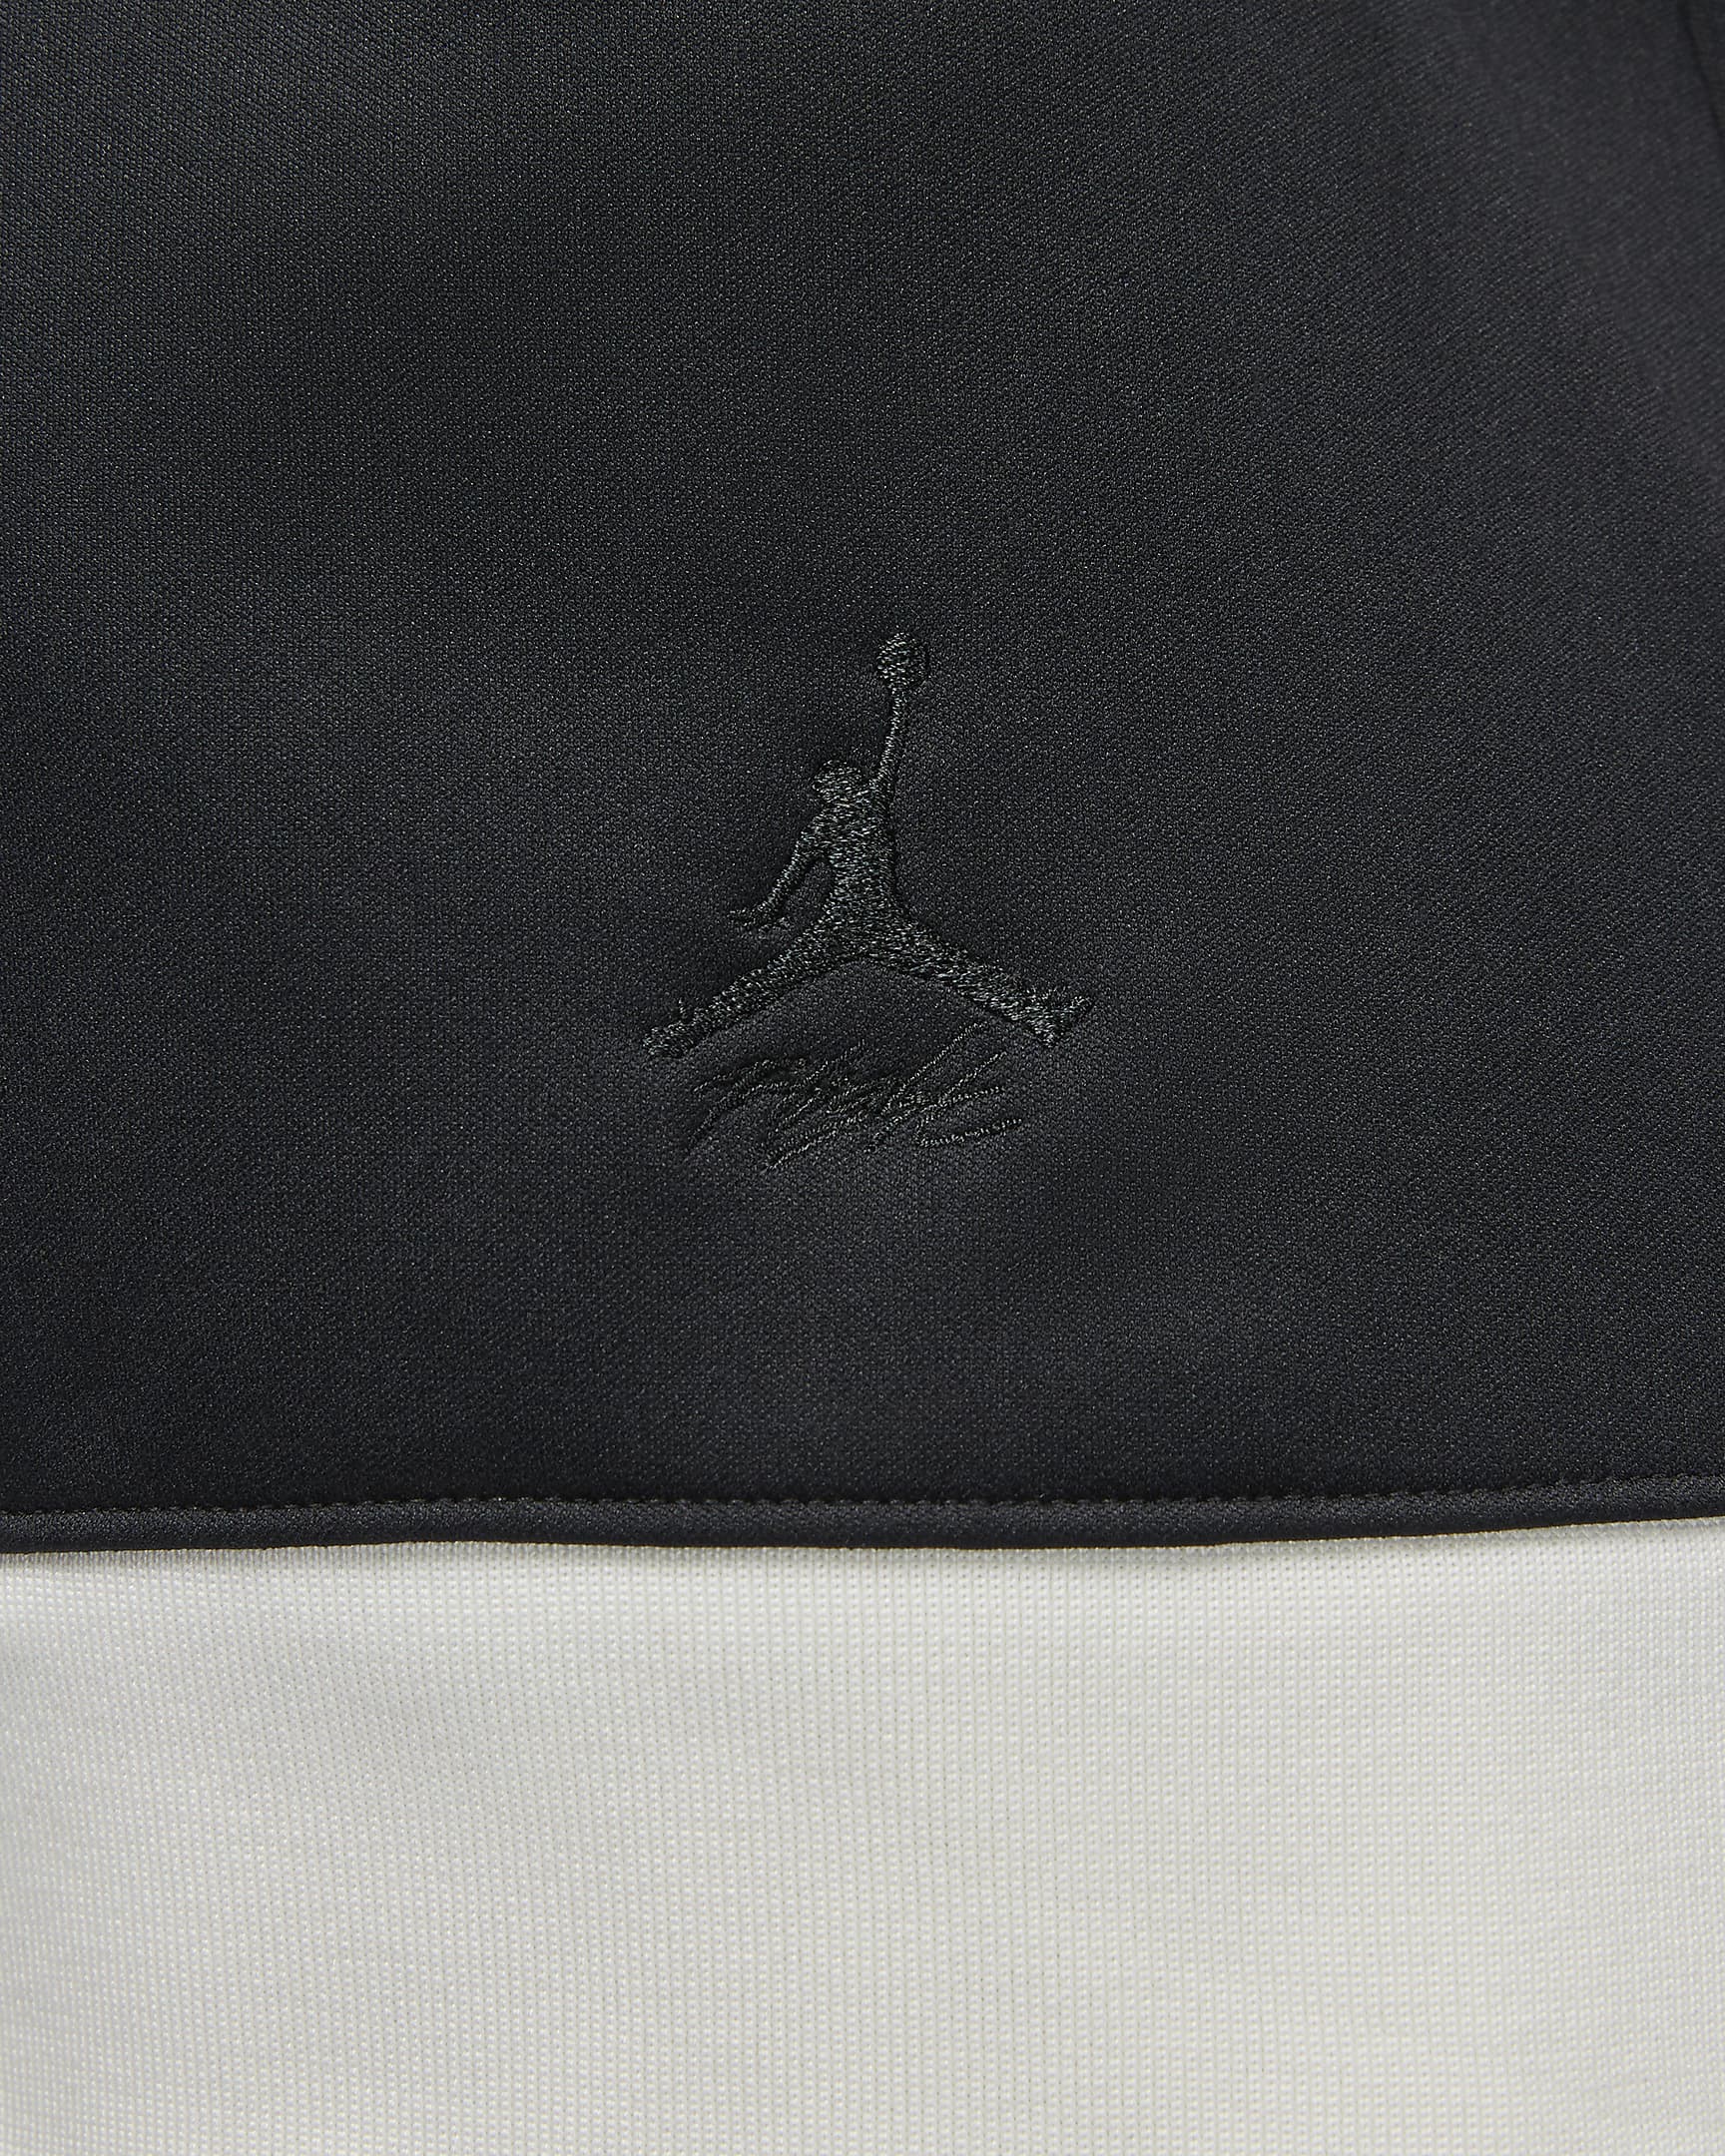 Jordan (Her)itage Women's Suit Top. Nike RO